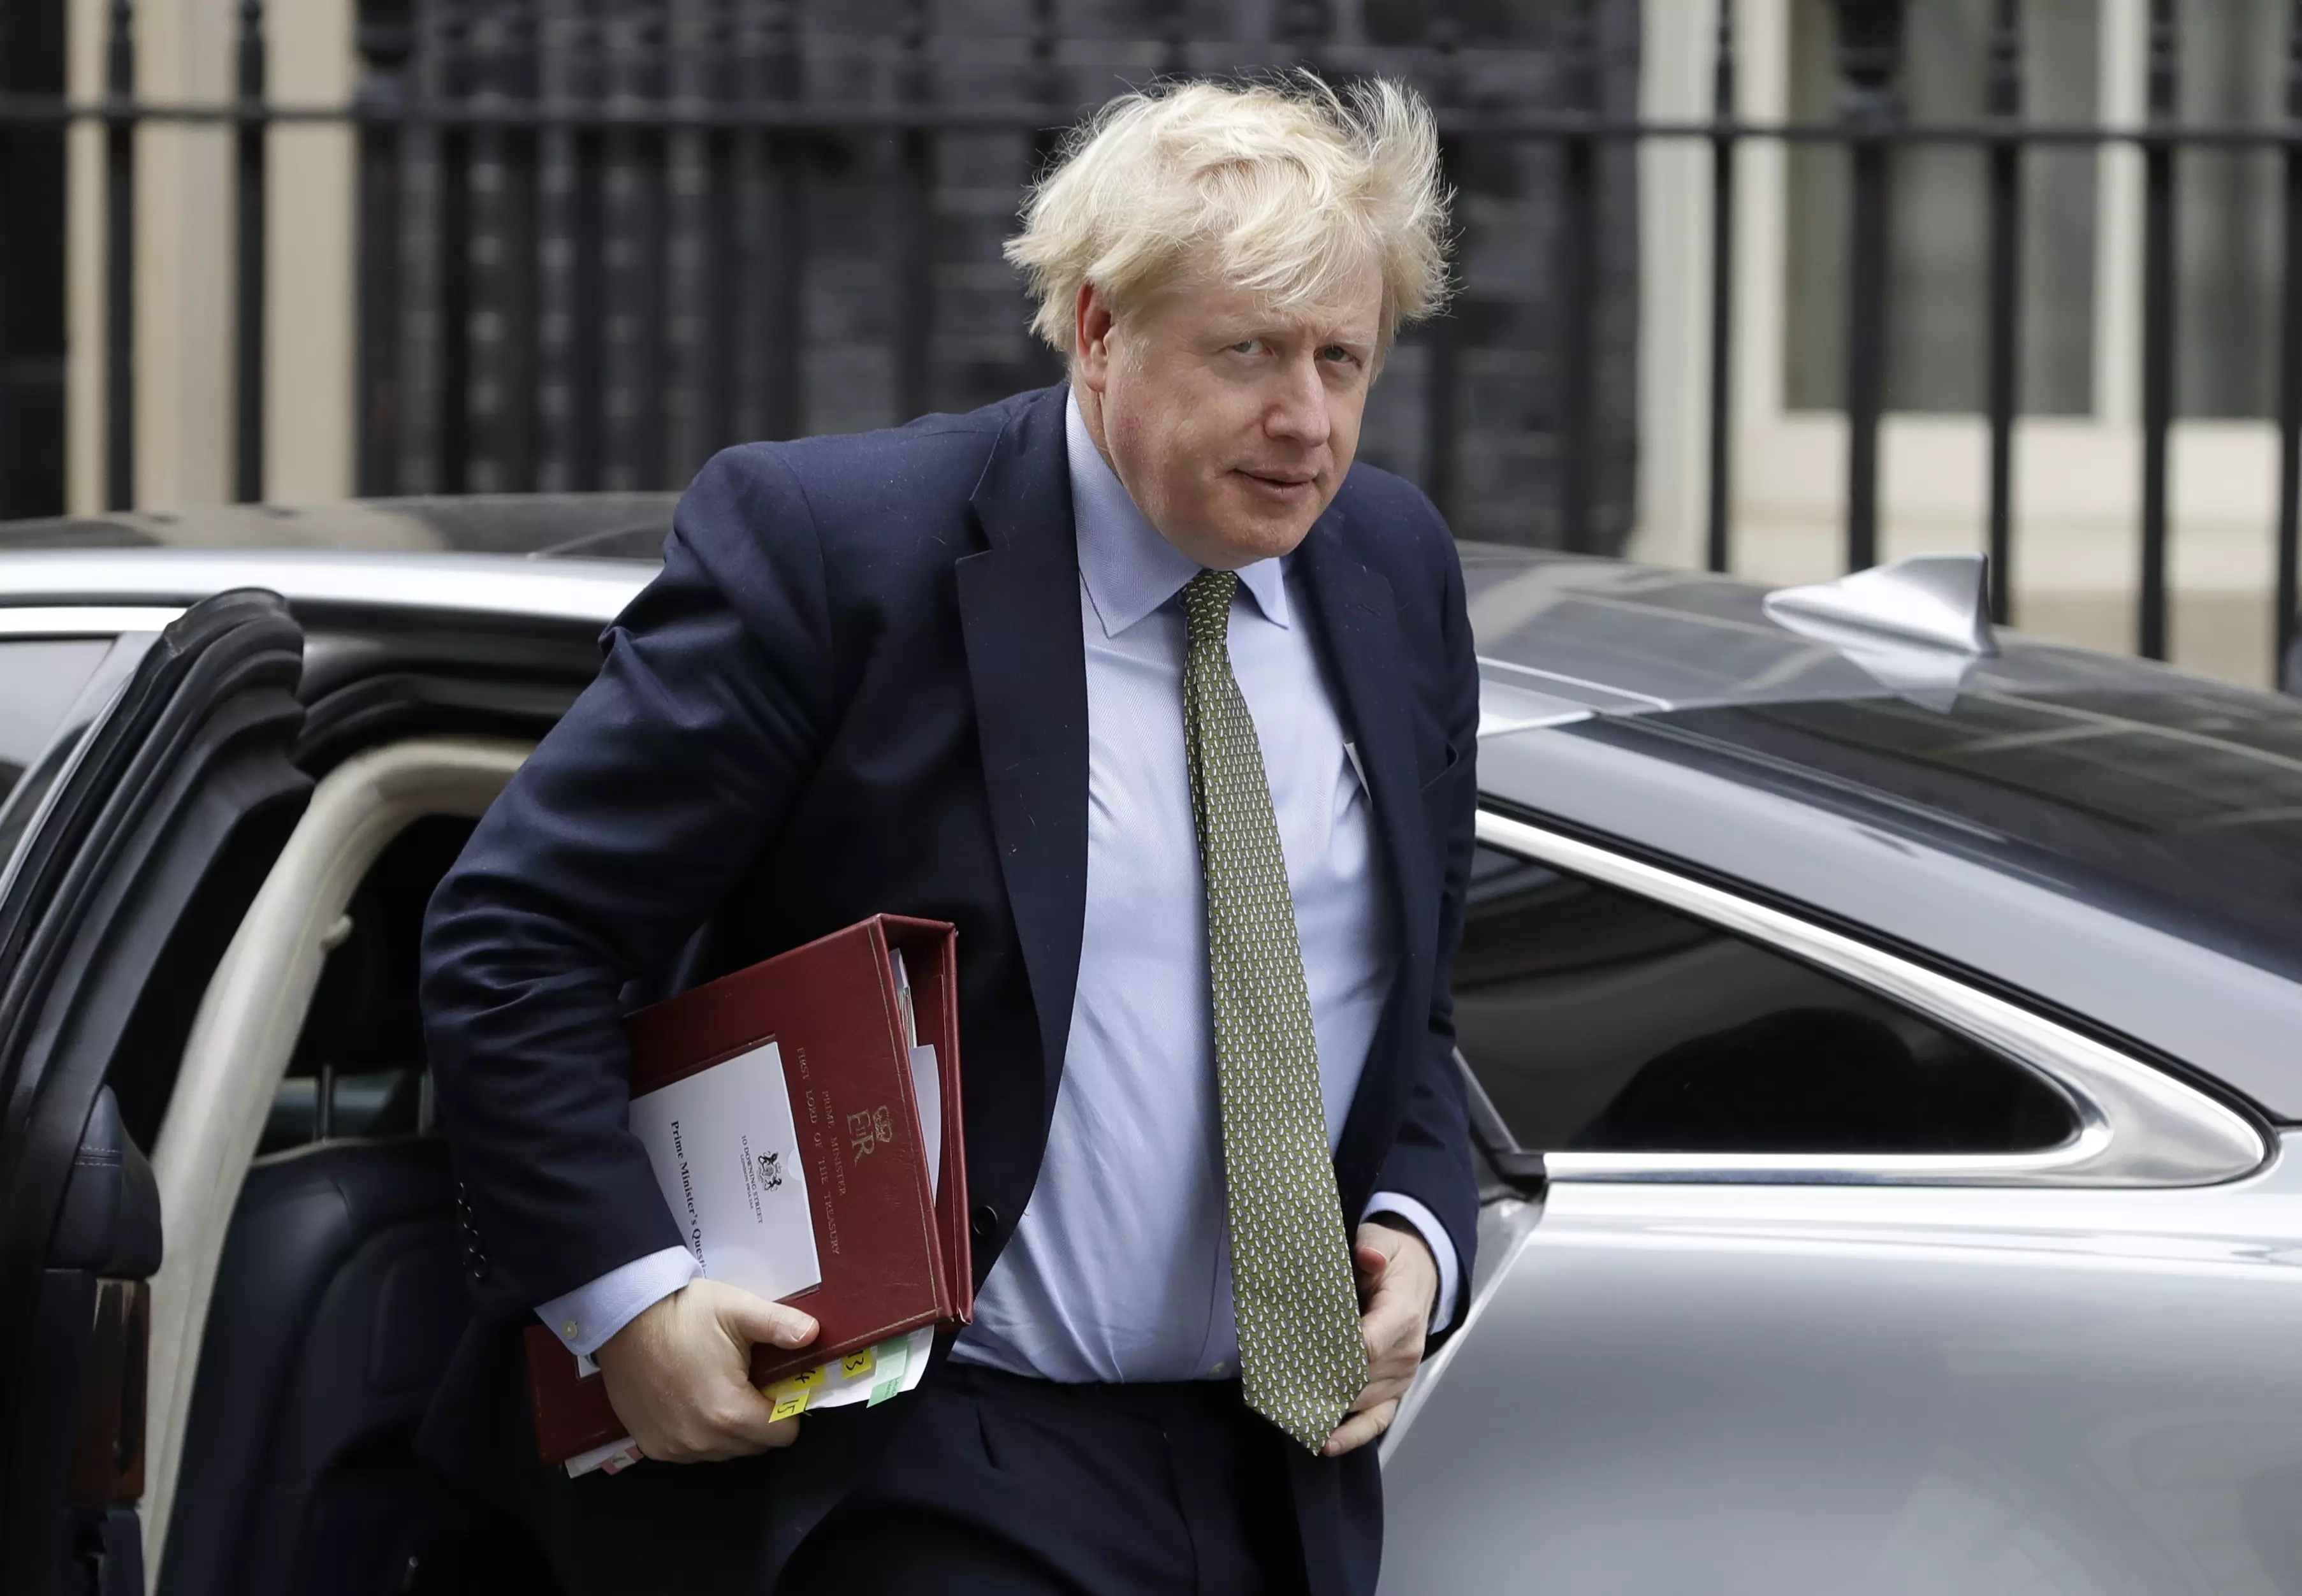 Boris Johnson has tested positive for coronavirus.